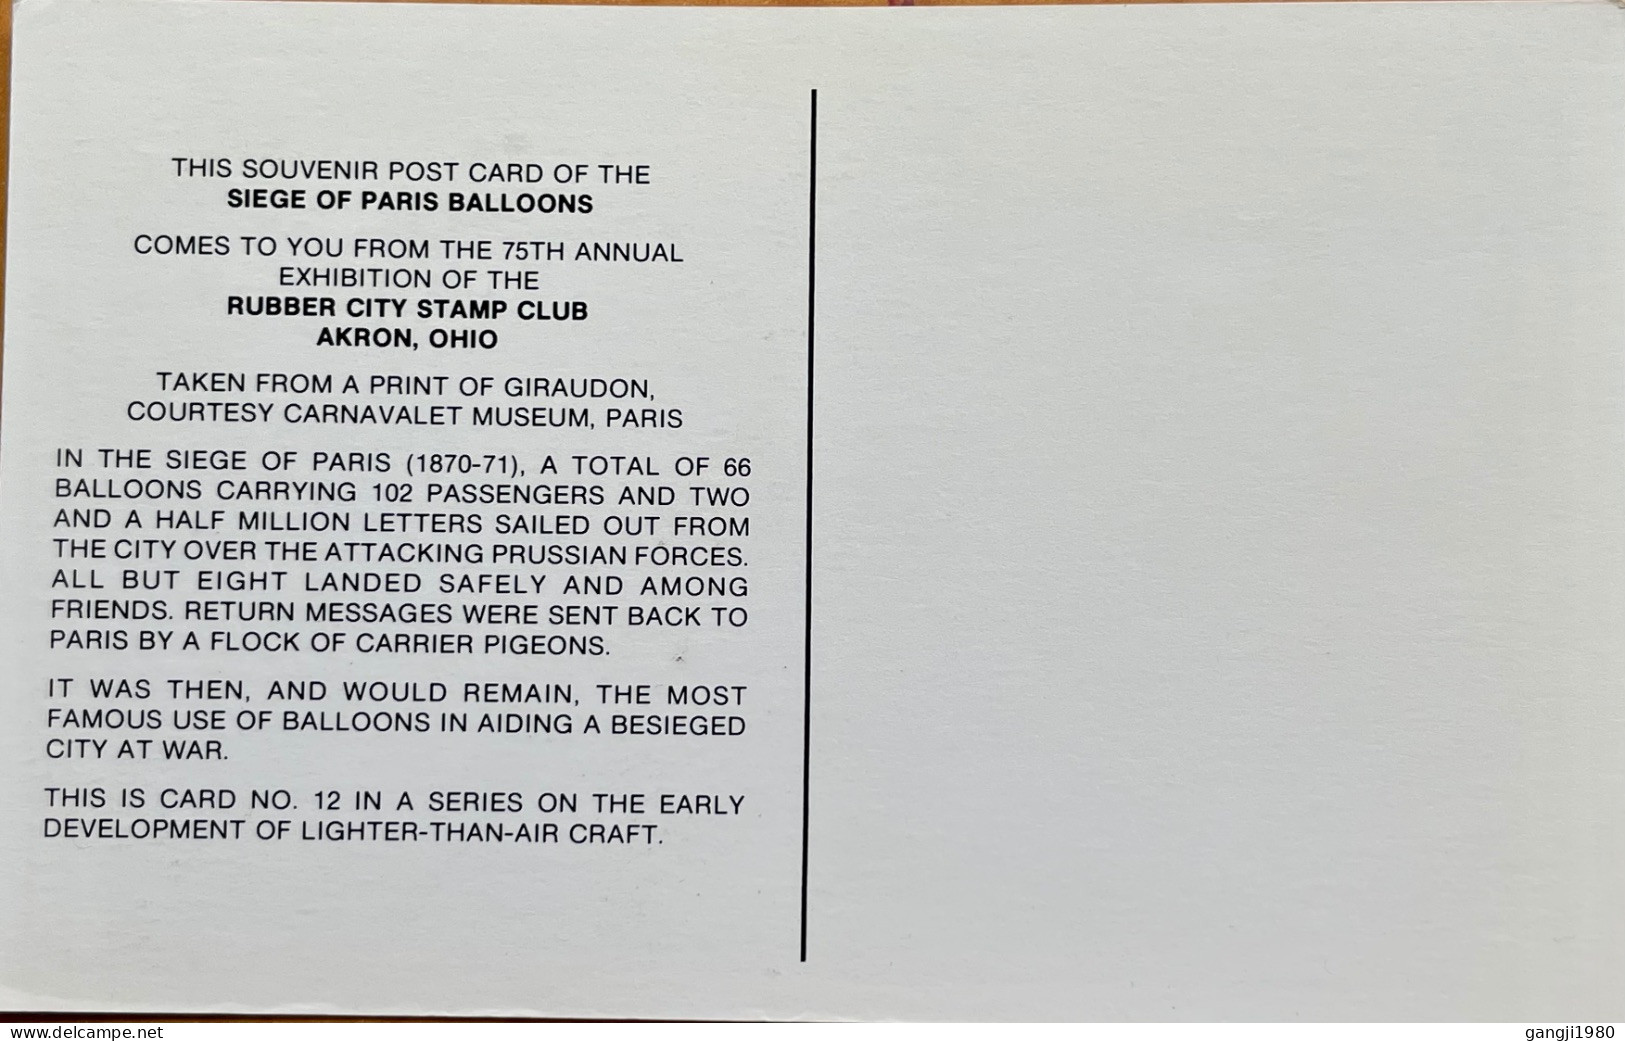 POSTCARD FRANCE STEGE OF PARIS 1870-71 66 BALLOONS CARRY 102 PASSENGER &2½ MILLION LETTERS - Balloons